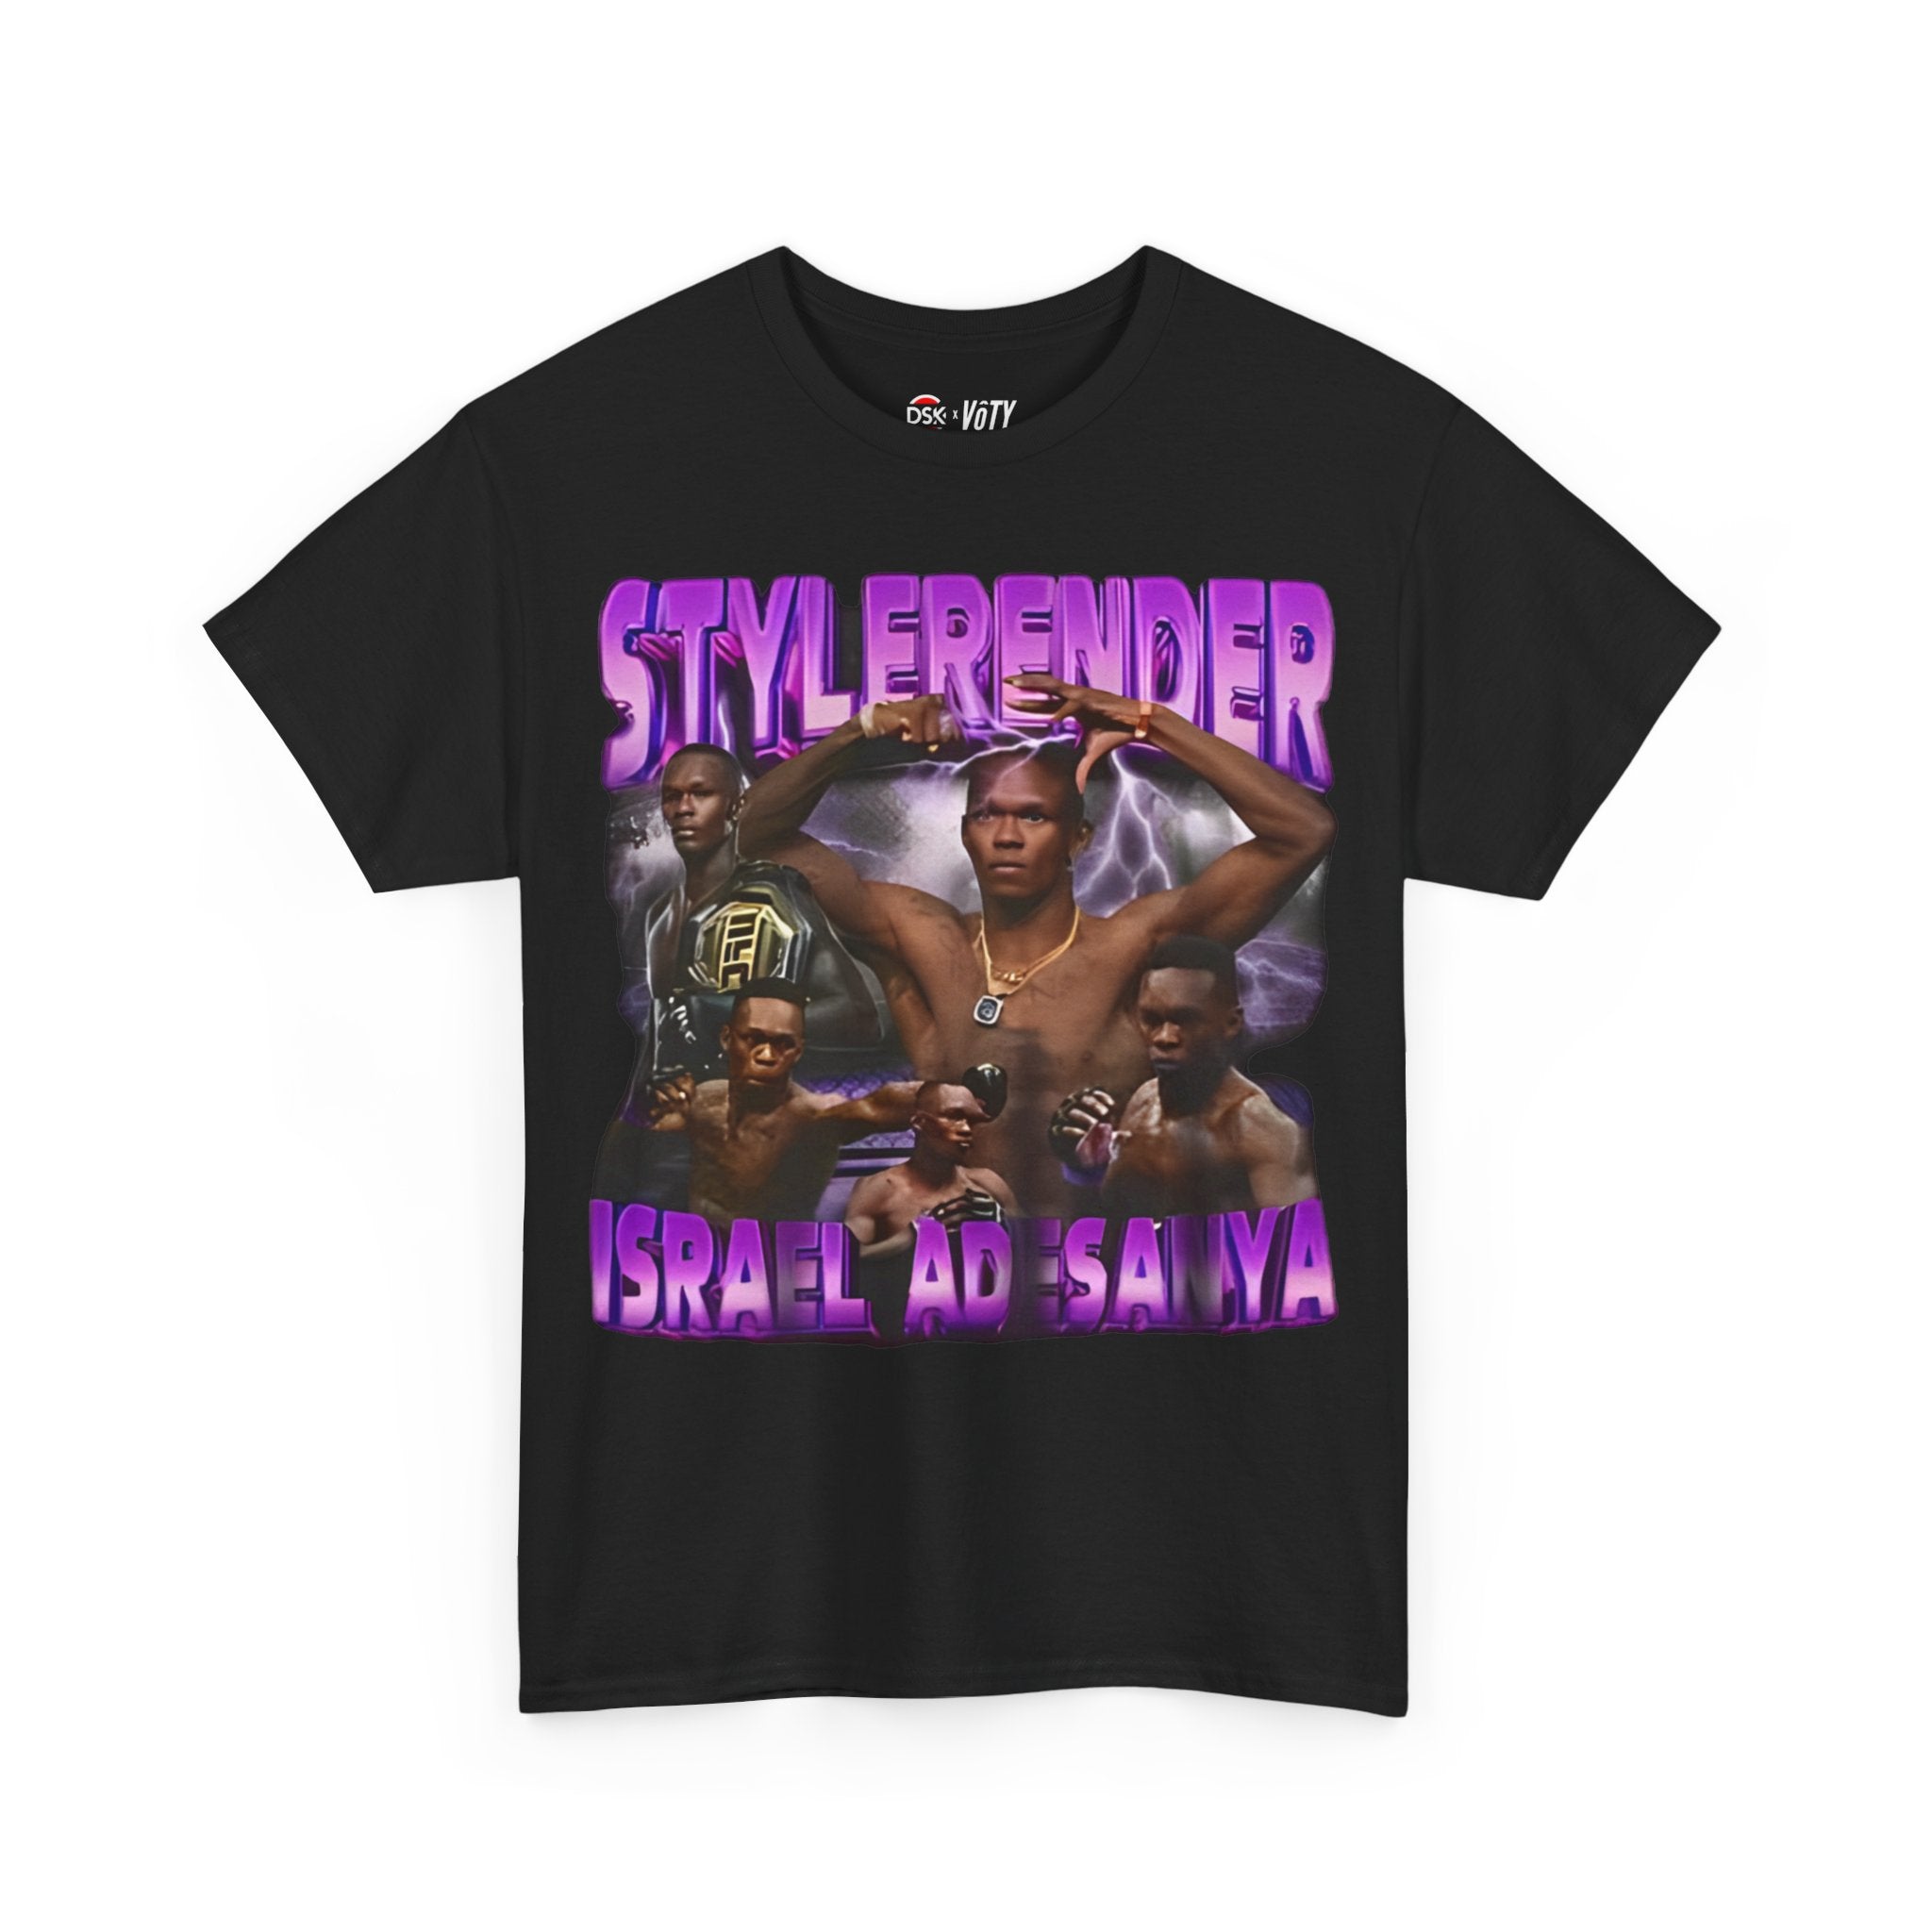 Izzy "Style Bender" T-shirt